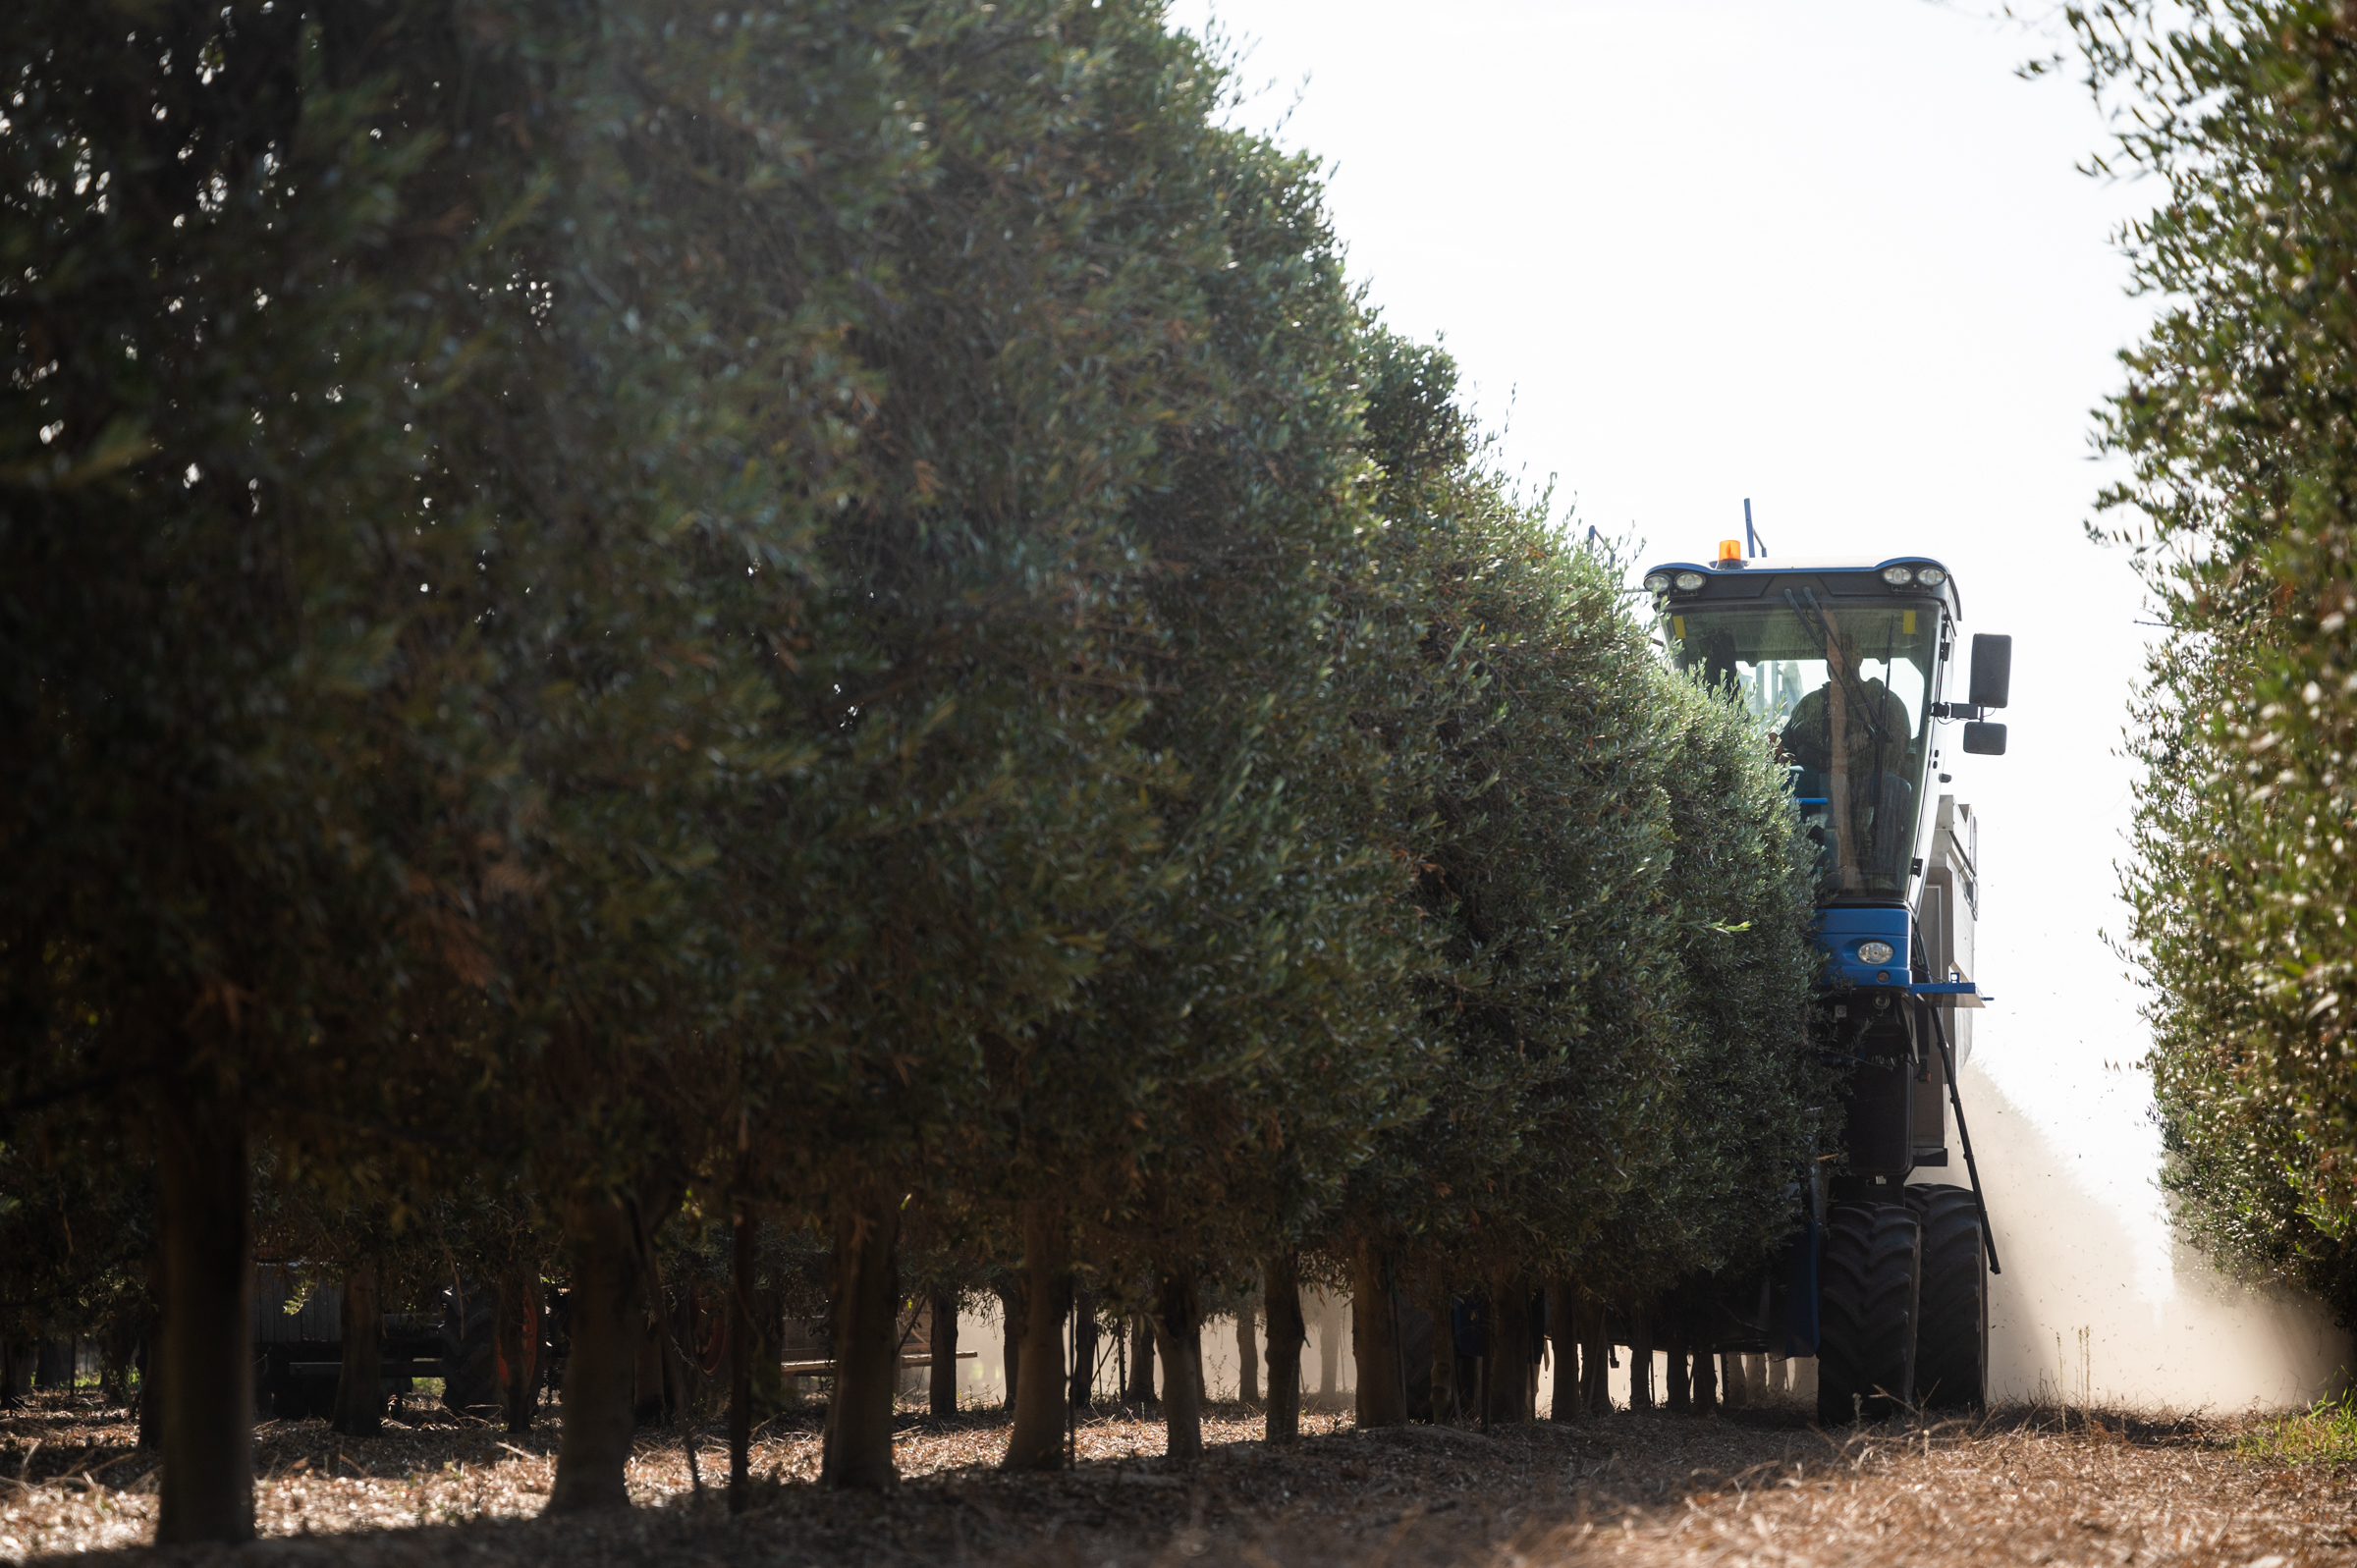 A dedicated olive harvester straddles a hedgerow of super high density trees